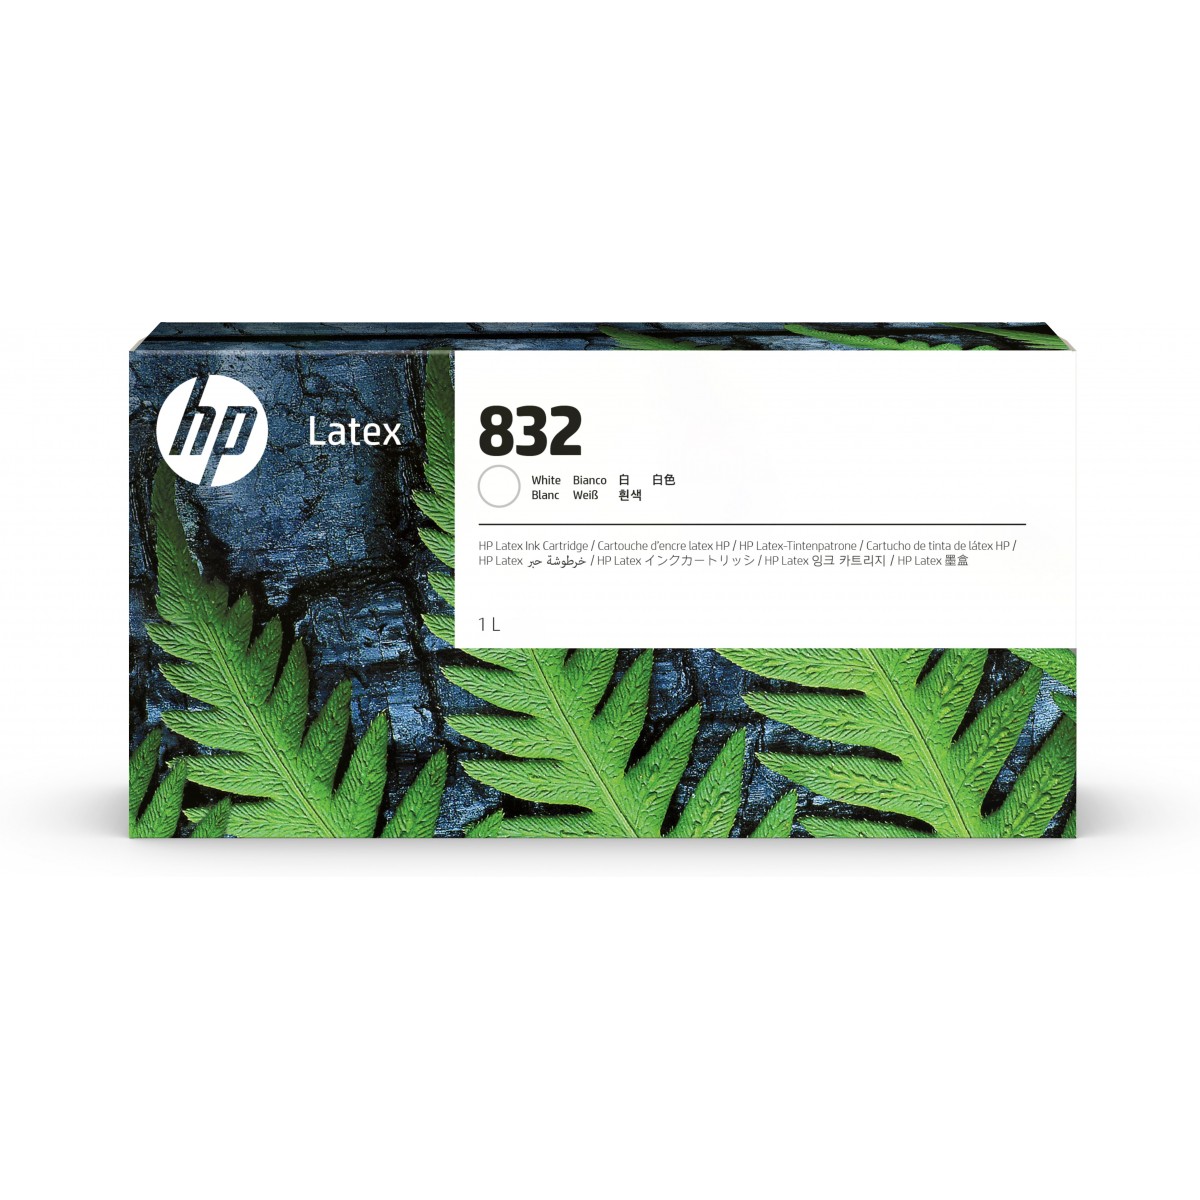 HP 832 - Original - Latex - White - HP - Single pack - HP Latex 700 W - 800 W Printers